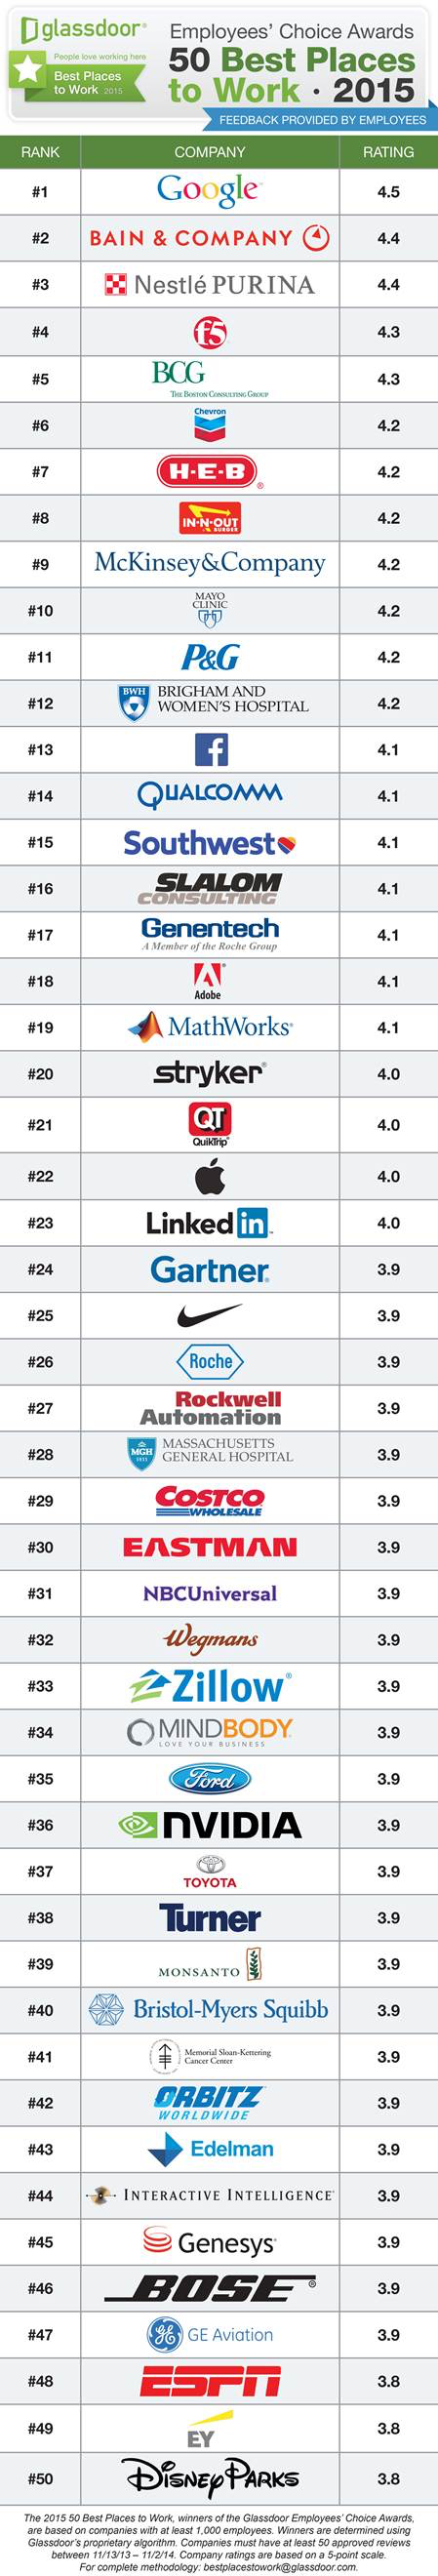 Top 50 companies